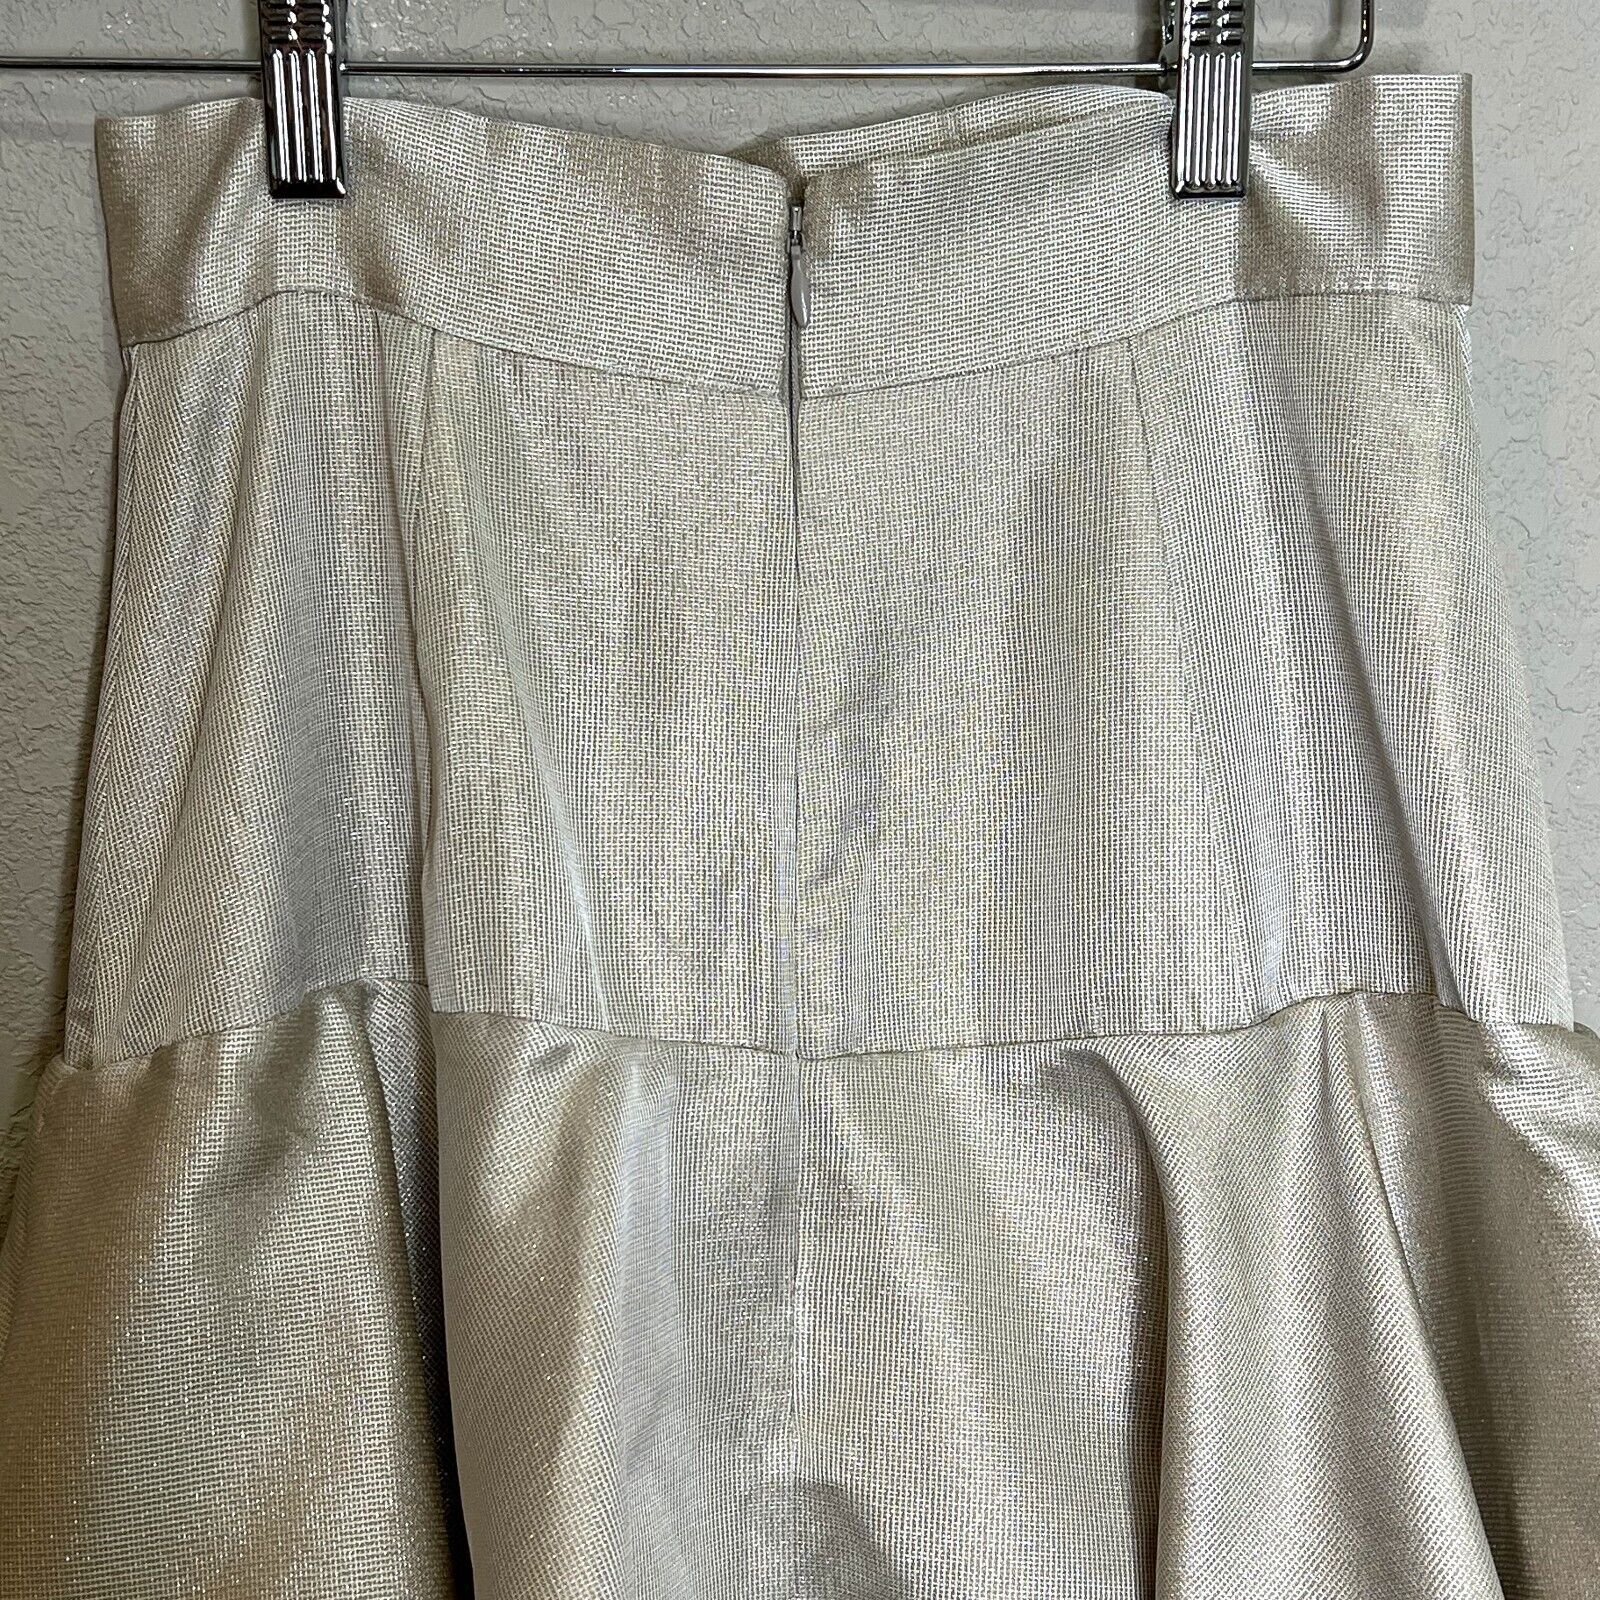 Keepsake Keep Talking Pleated Layered Maxi Skirt Size XS 0-2 NEW